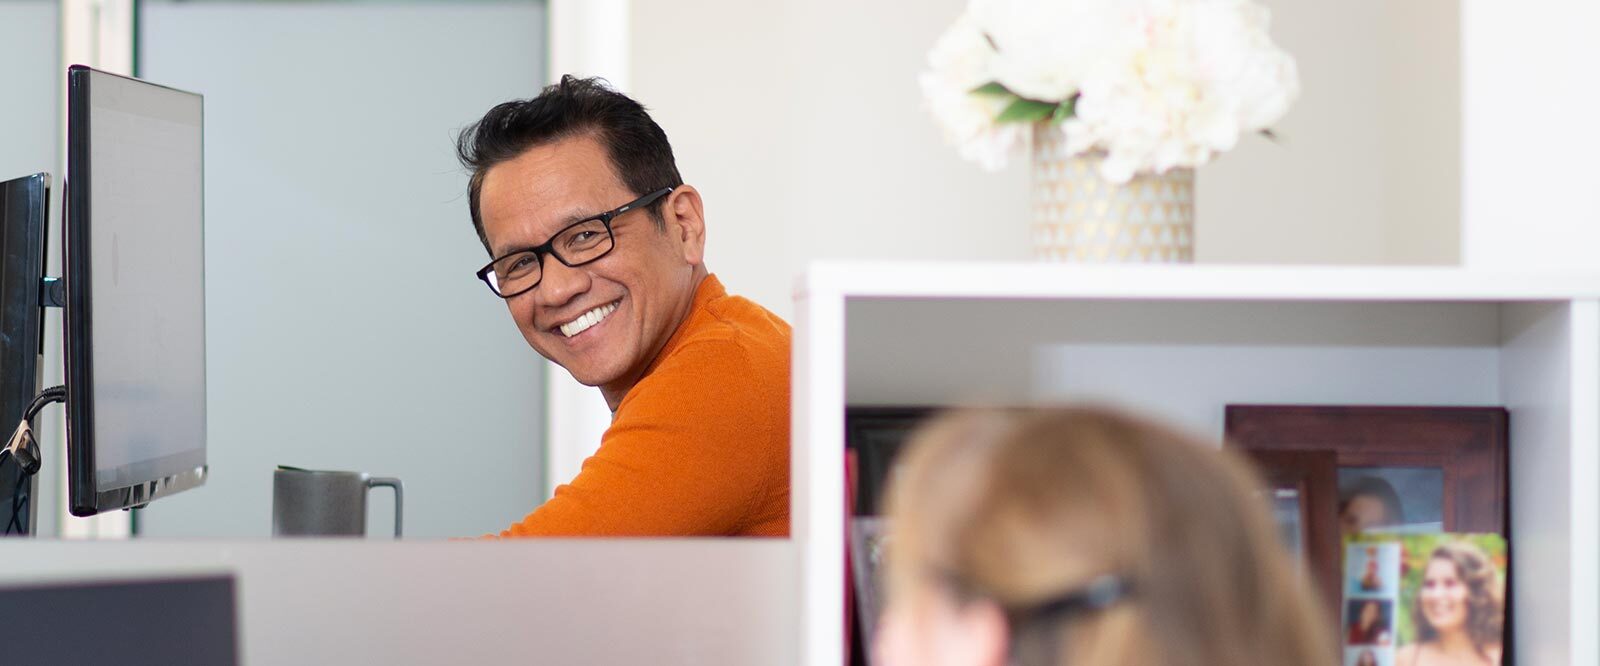 Man smiling at coworker